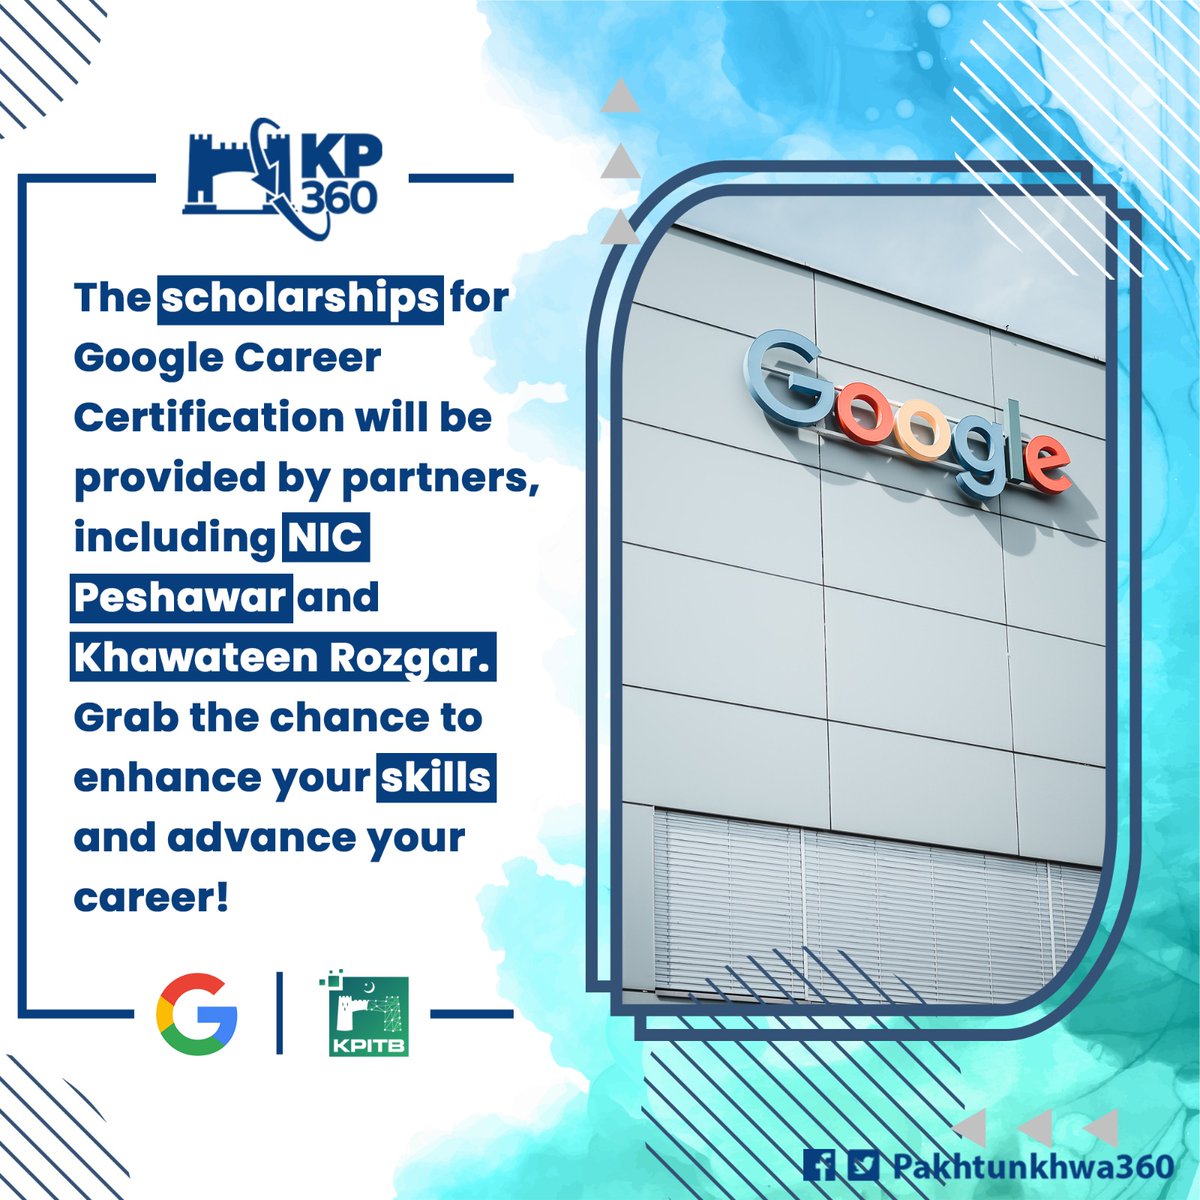 The scholarships for Google Career Certification will be provided by partners, #NICPeshawar & #KhawateenRozgar 
#KPGoesDigital